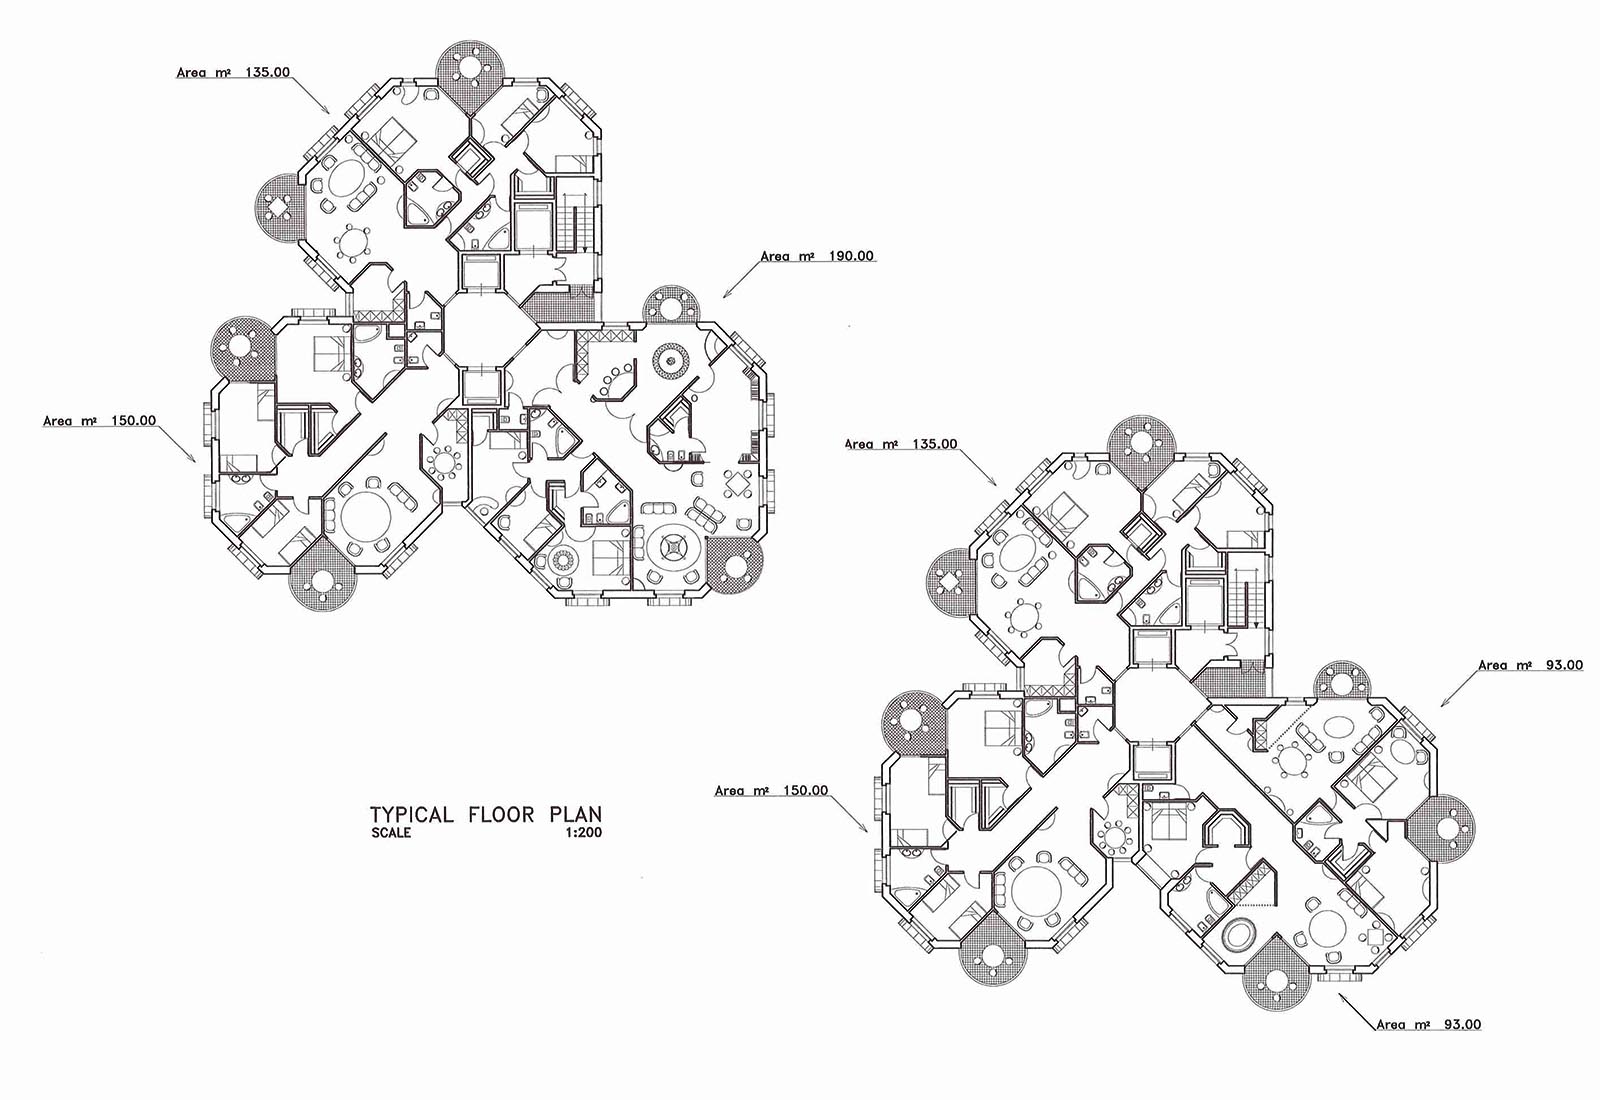 Cornice Plaza Doha - Typical floor plan